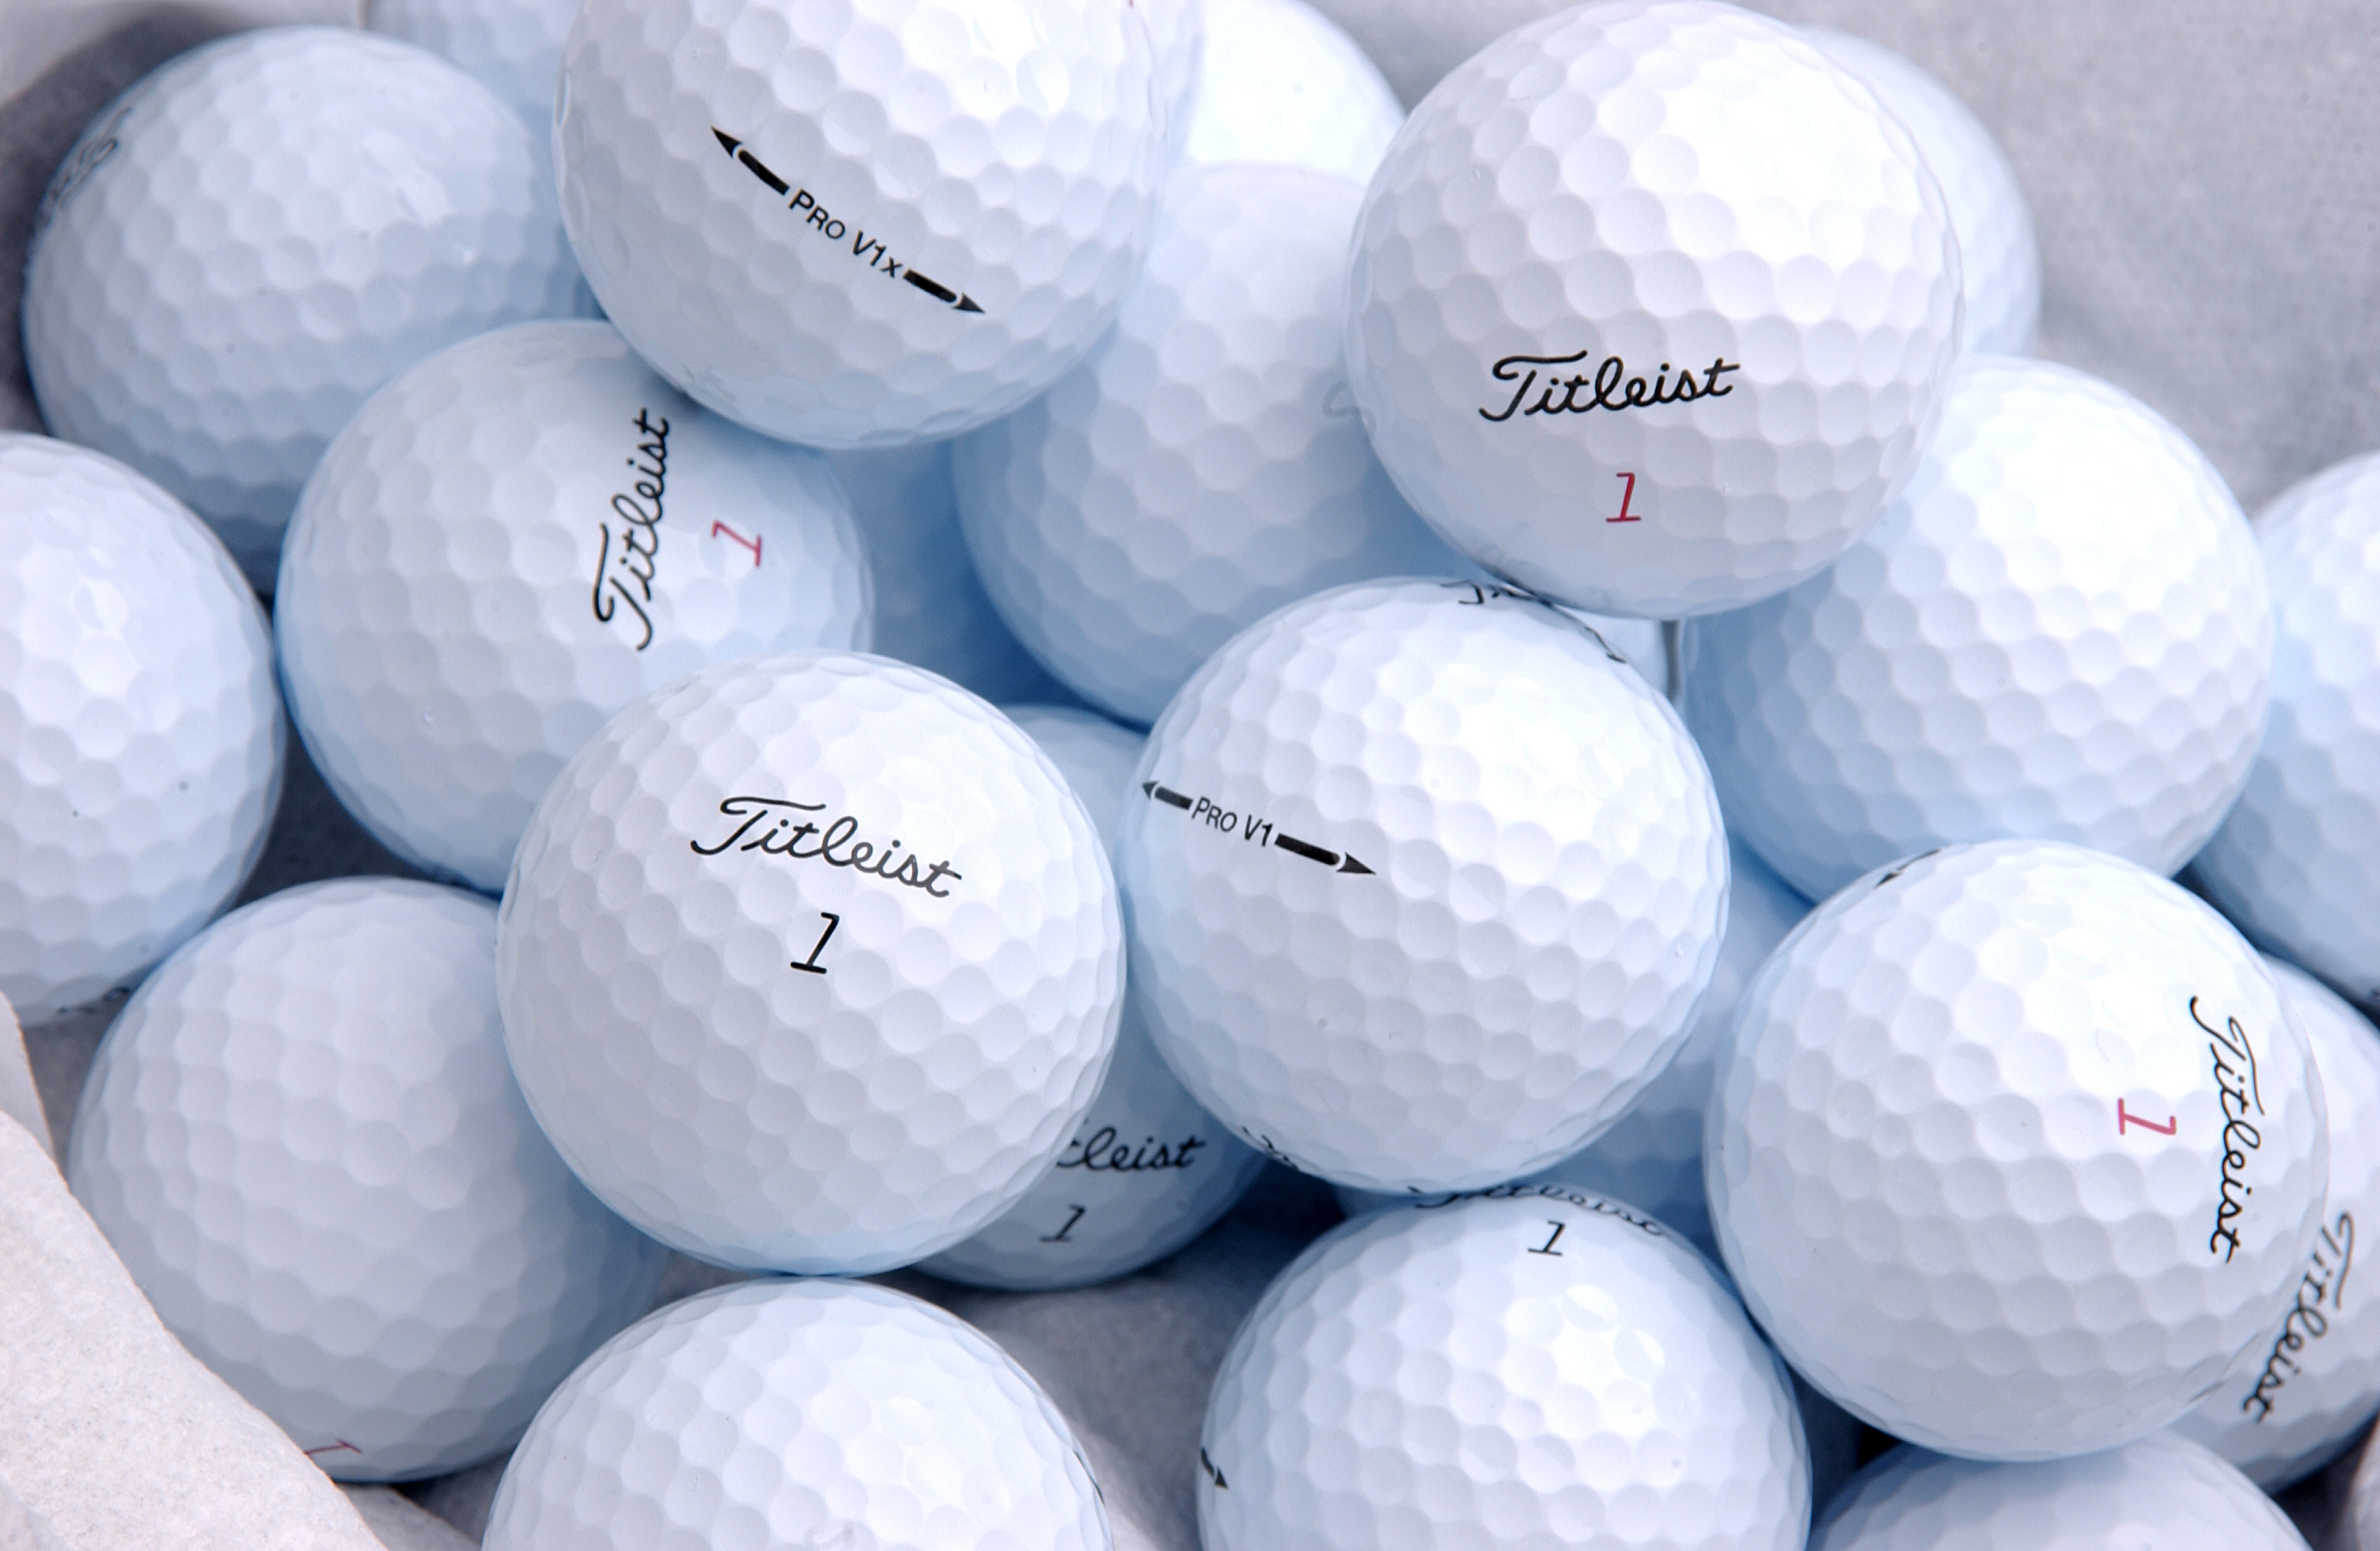 Many golf balls found in lake | Ponca City News